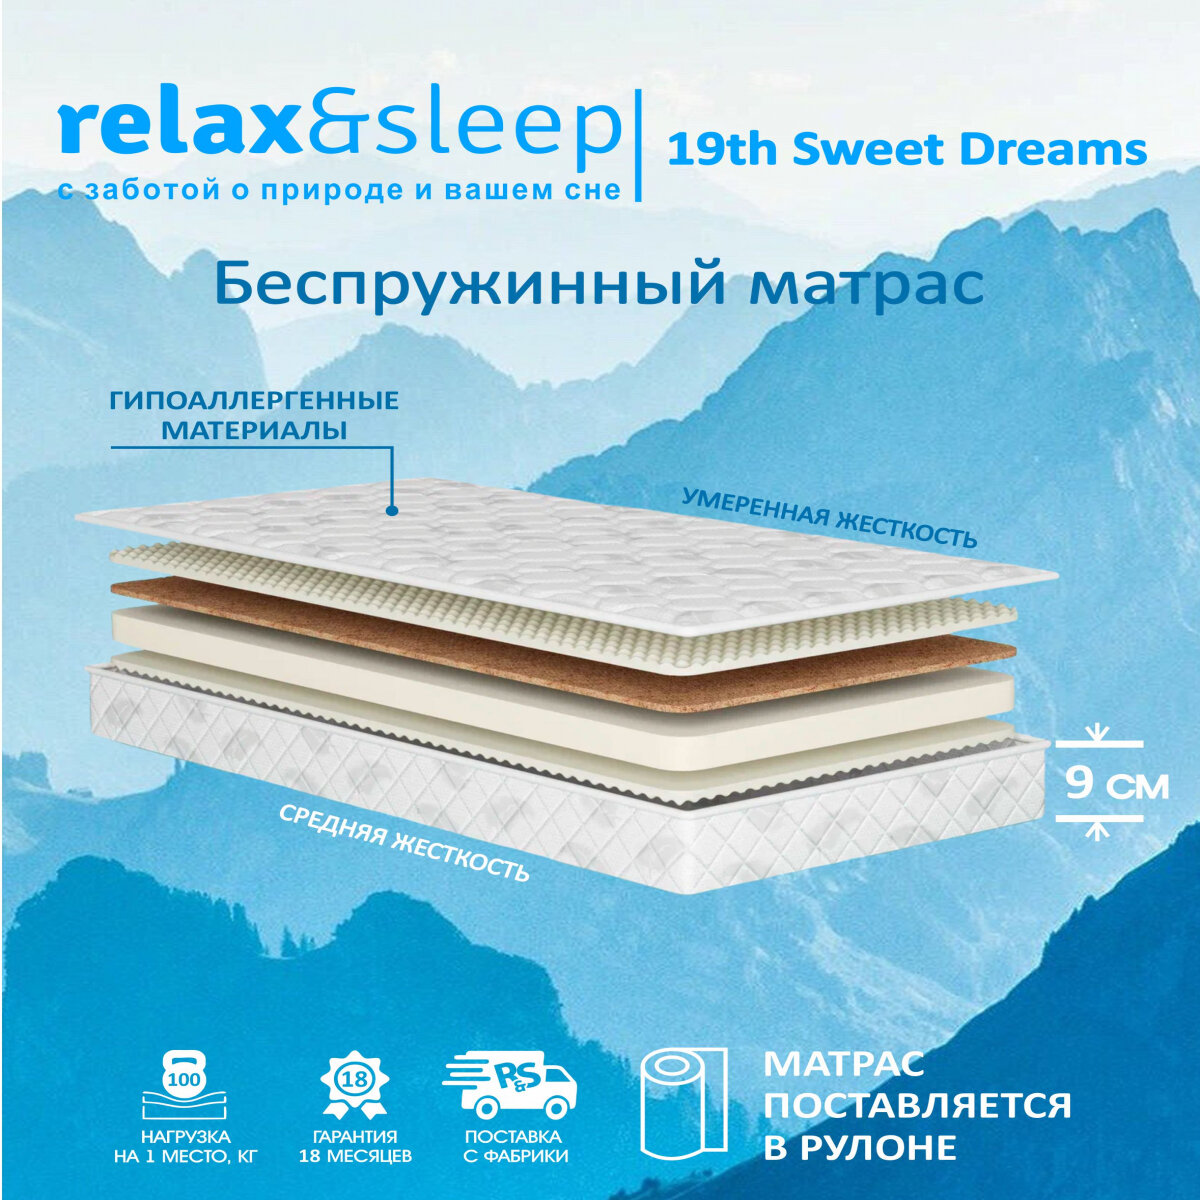 Матрас Relax&Sleep ортопедический беспружинный 19th Sweet Dreams (110 / 190)